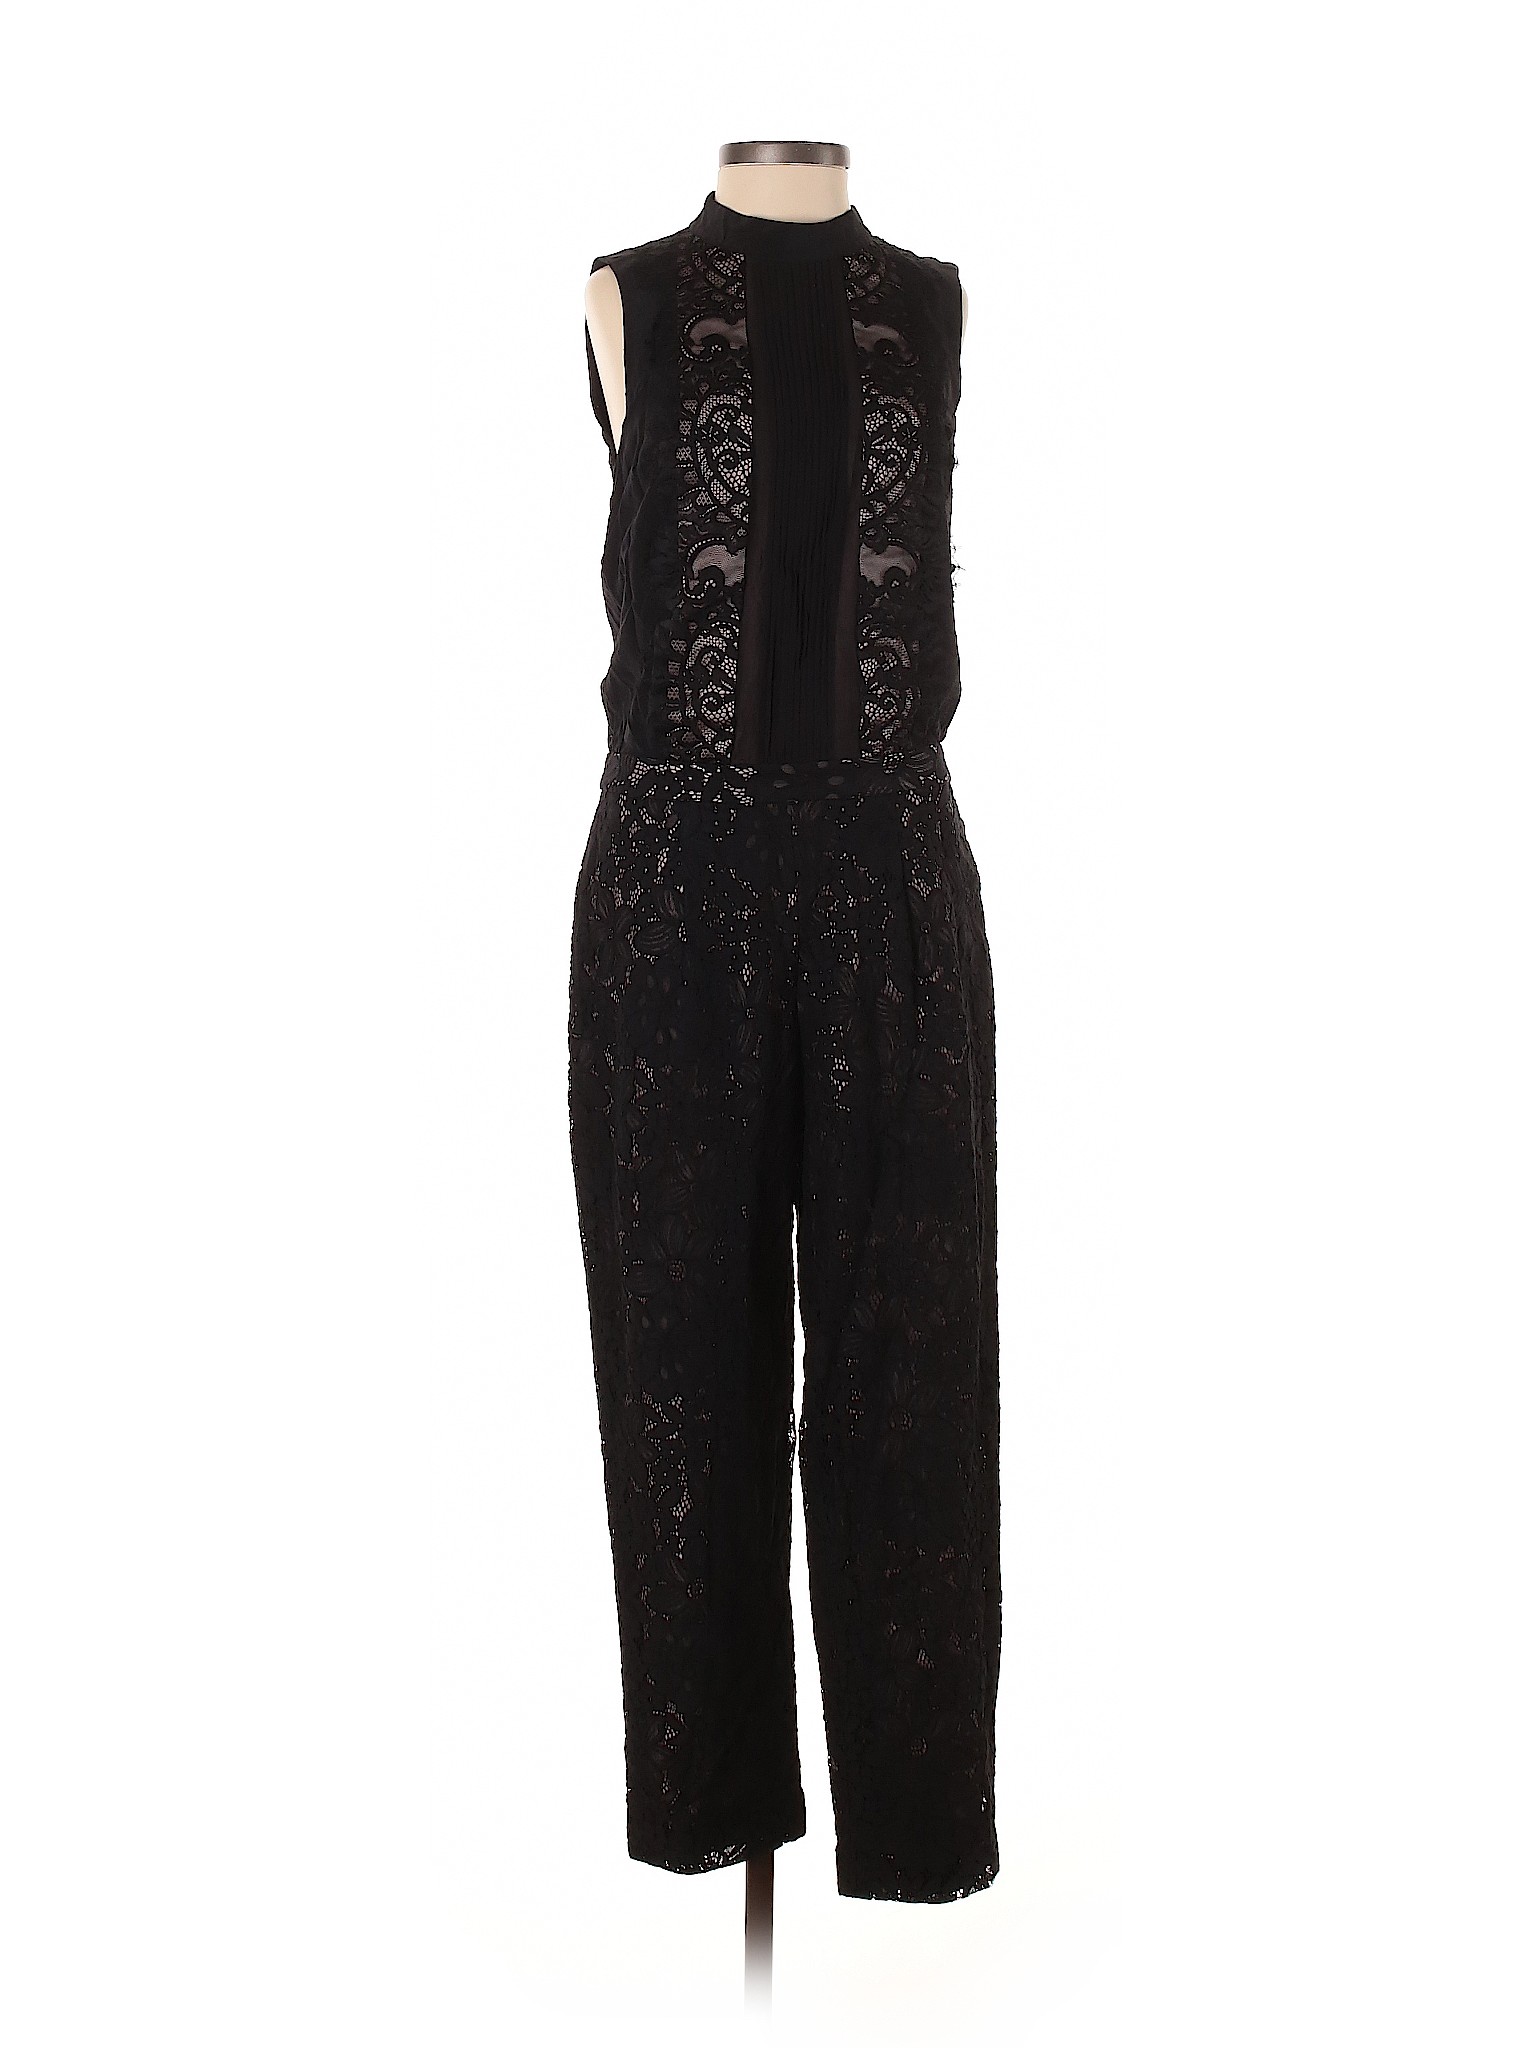 Karen Millen Solid Black Jumpsuit Size Sm (2) - 69% off | thredUP